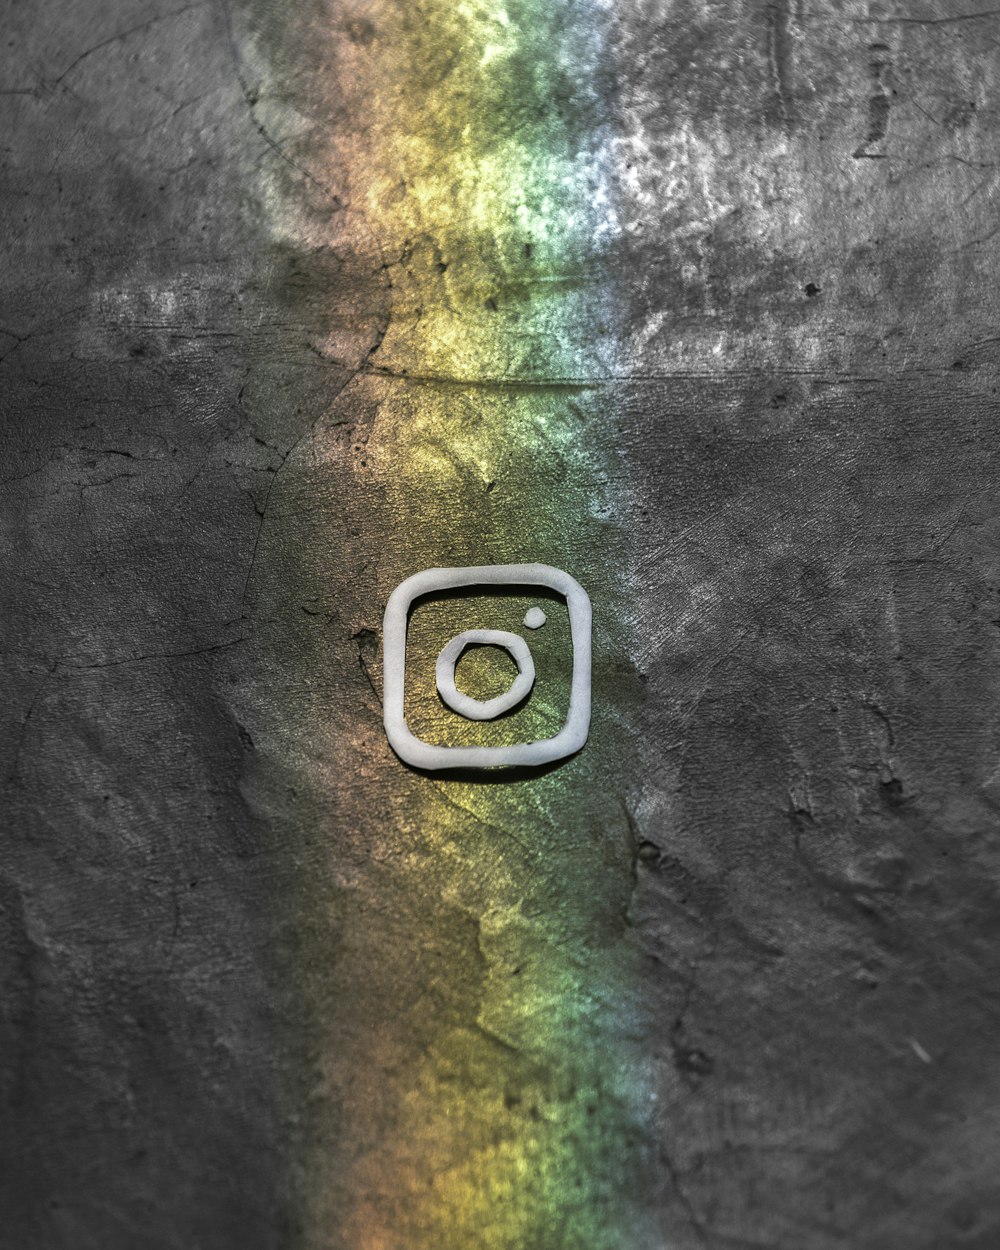 100 Instagram Pictures HD Download Free Images On Unsplash